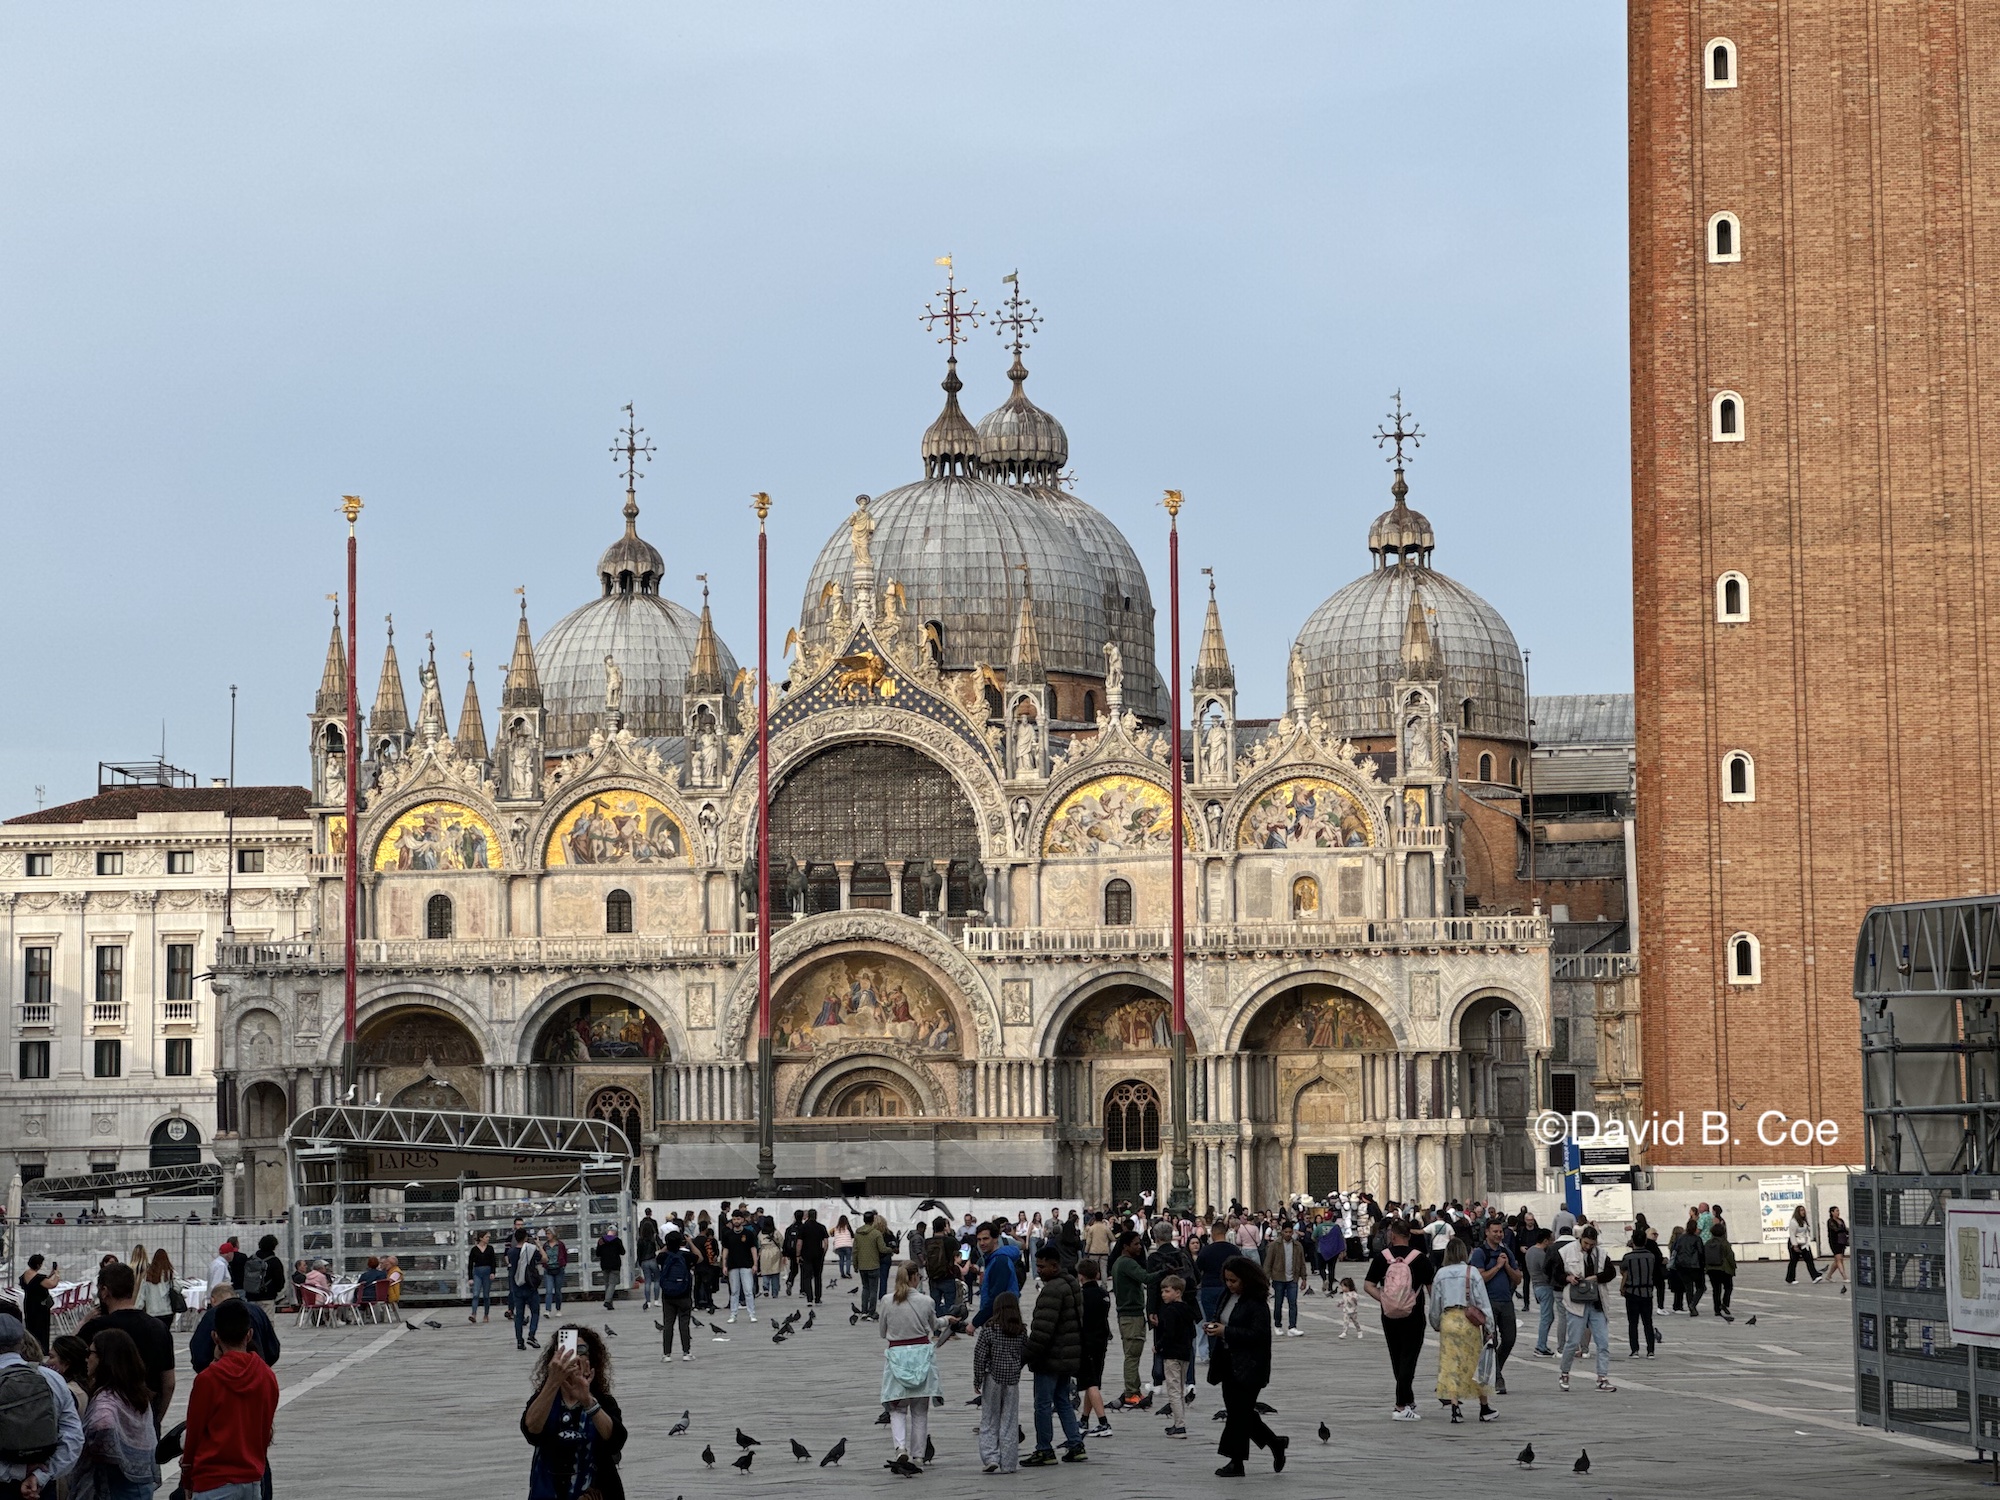 Piazza di San Marco and St. Mark's Basilica, Venice. Photo by David B. Coe